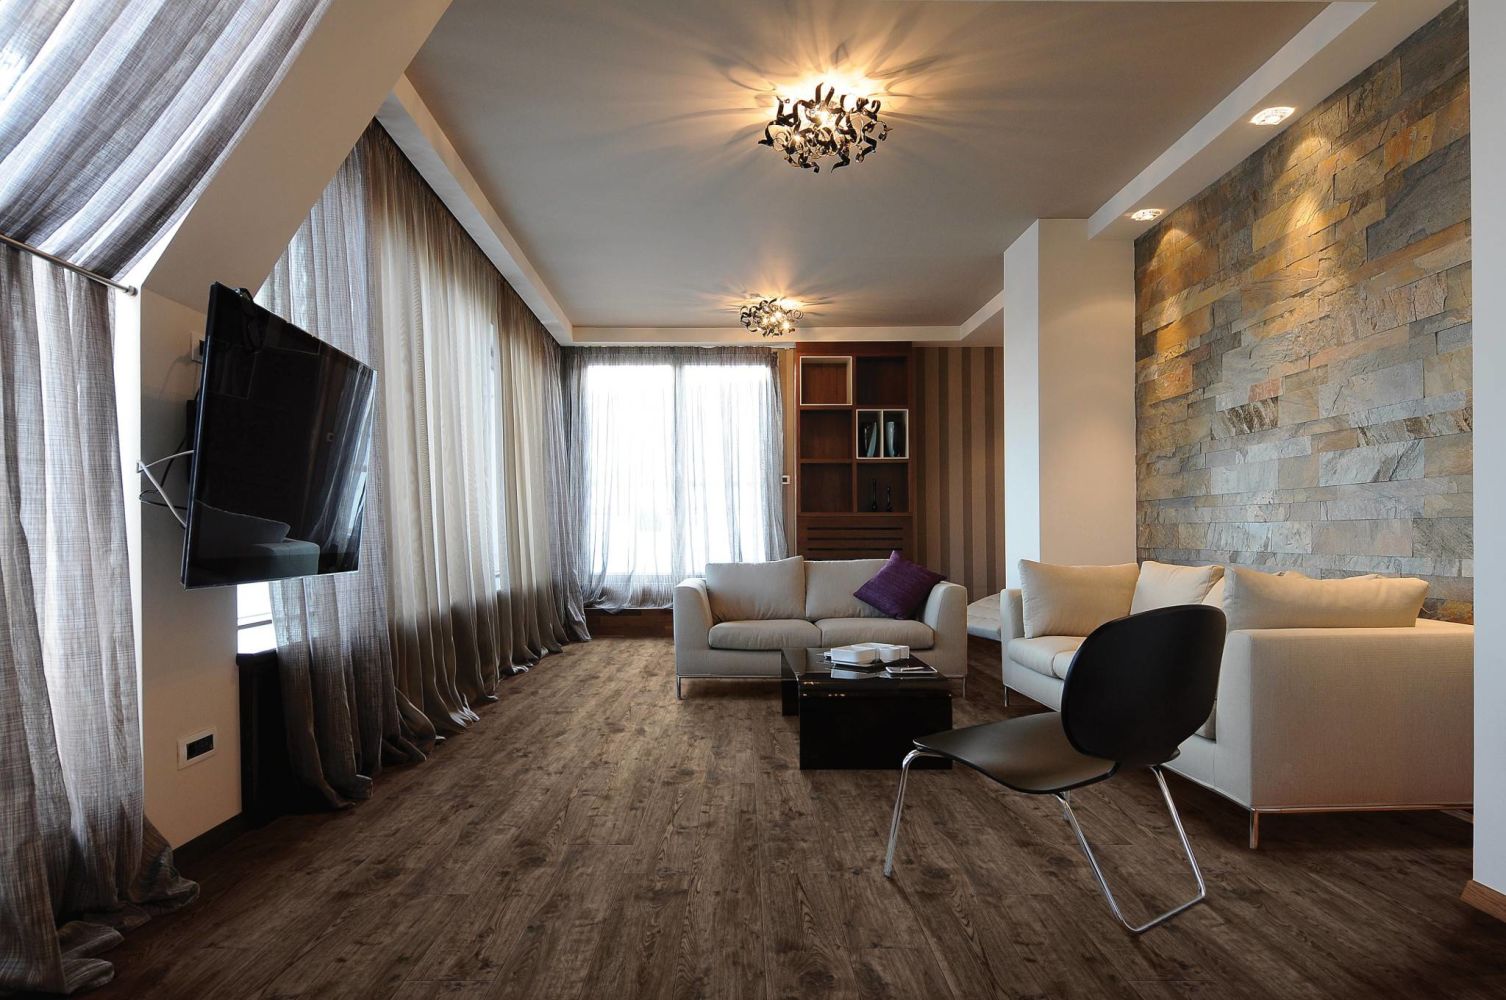 Shaw Floors Resilient Residential COREtec Plus Enhanced XL Moran Oak 00917_VV035